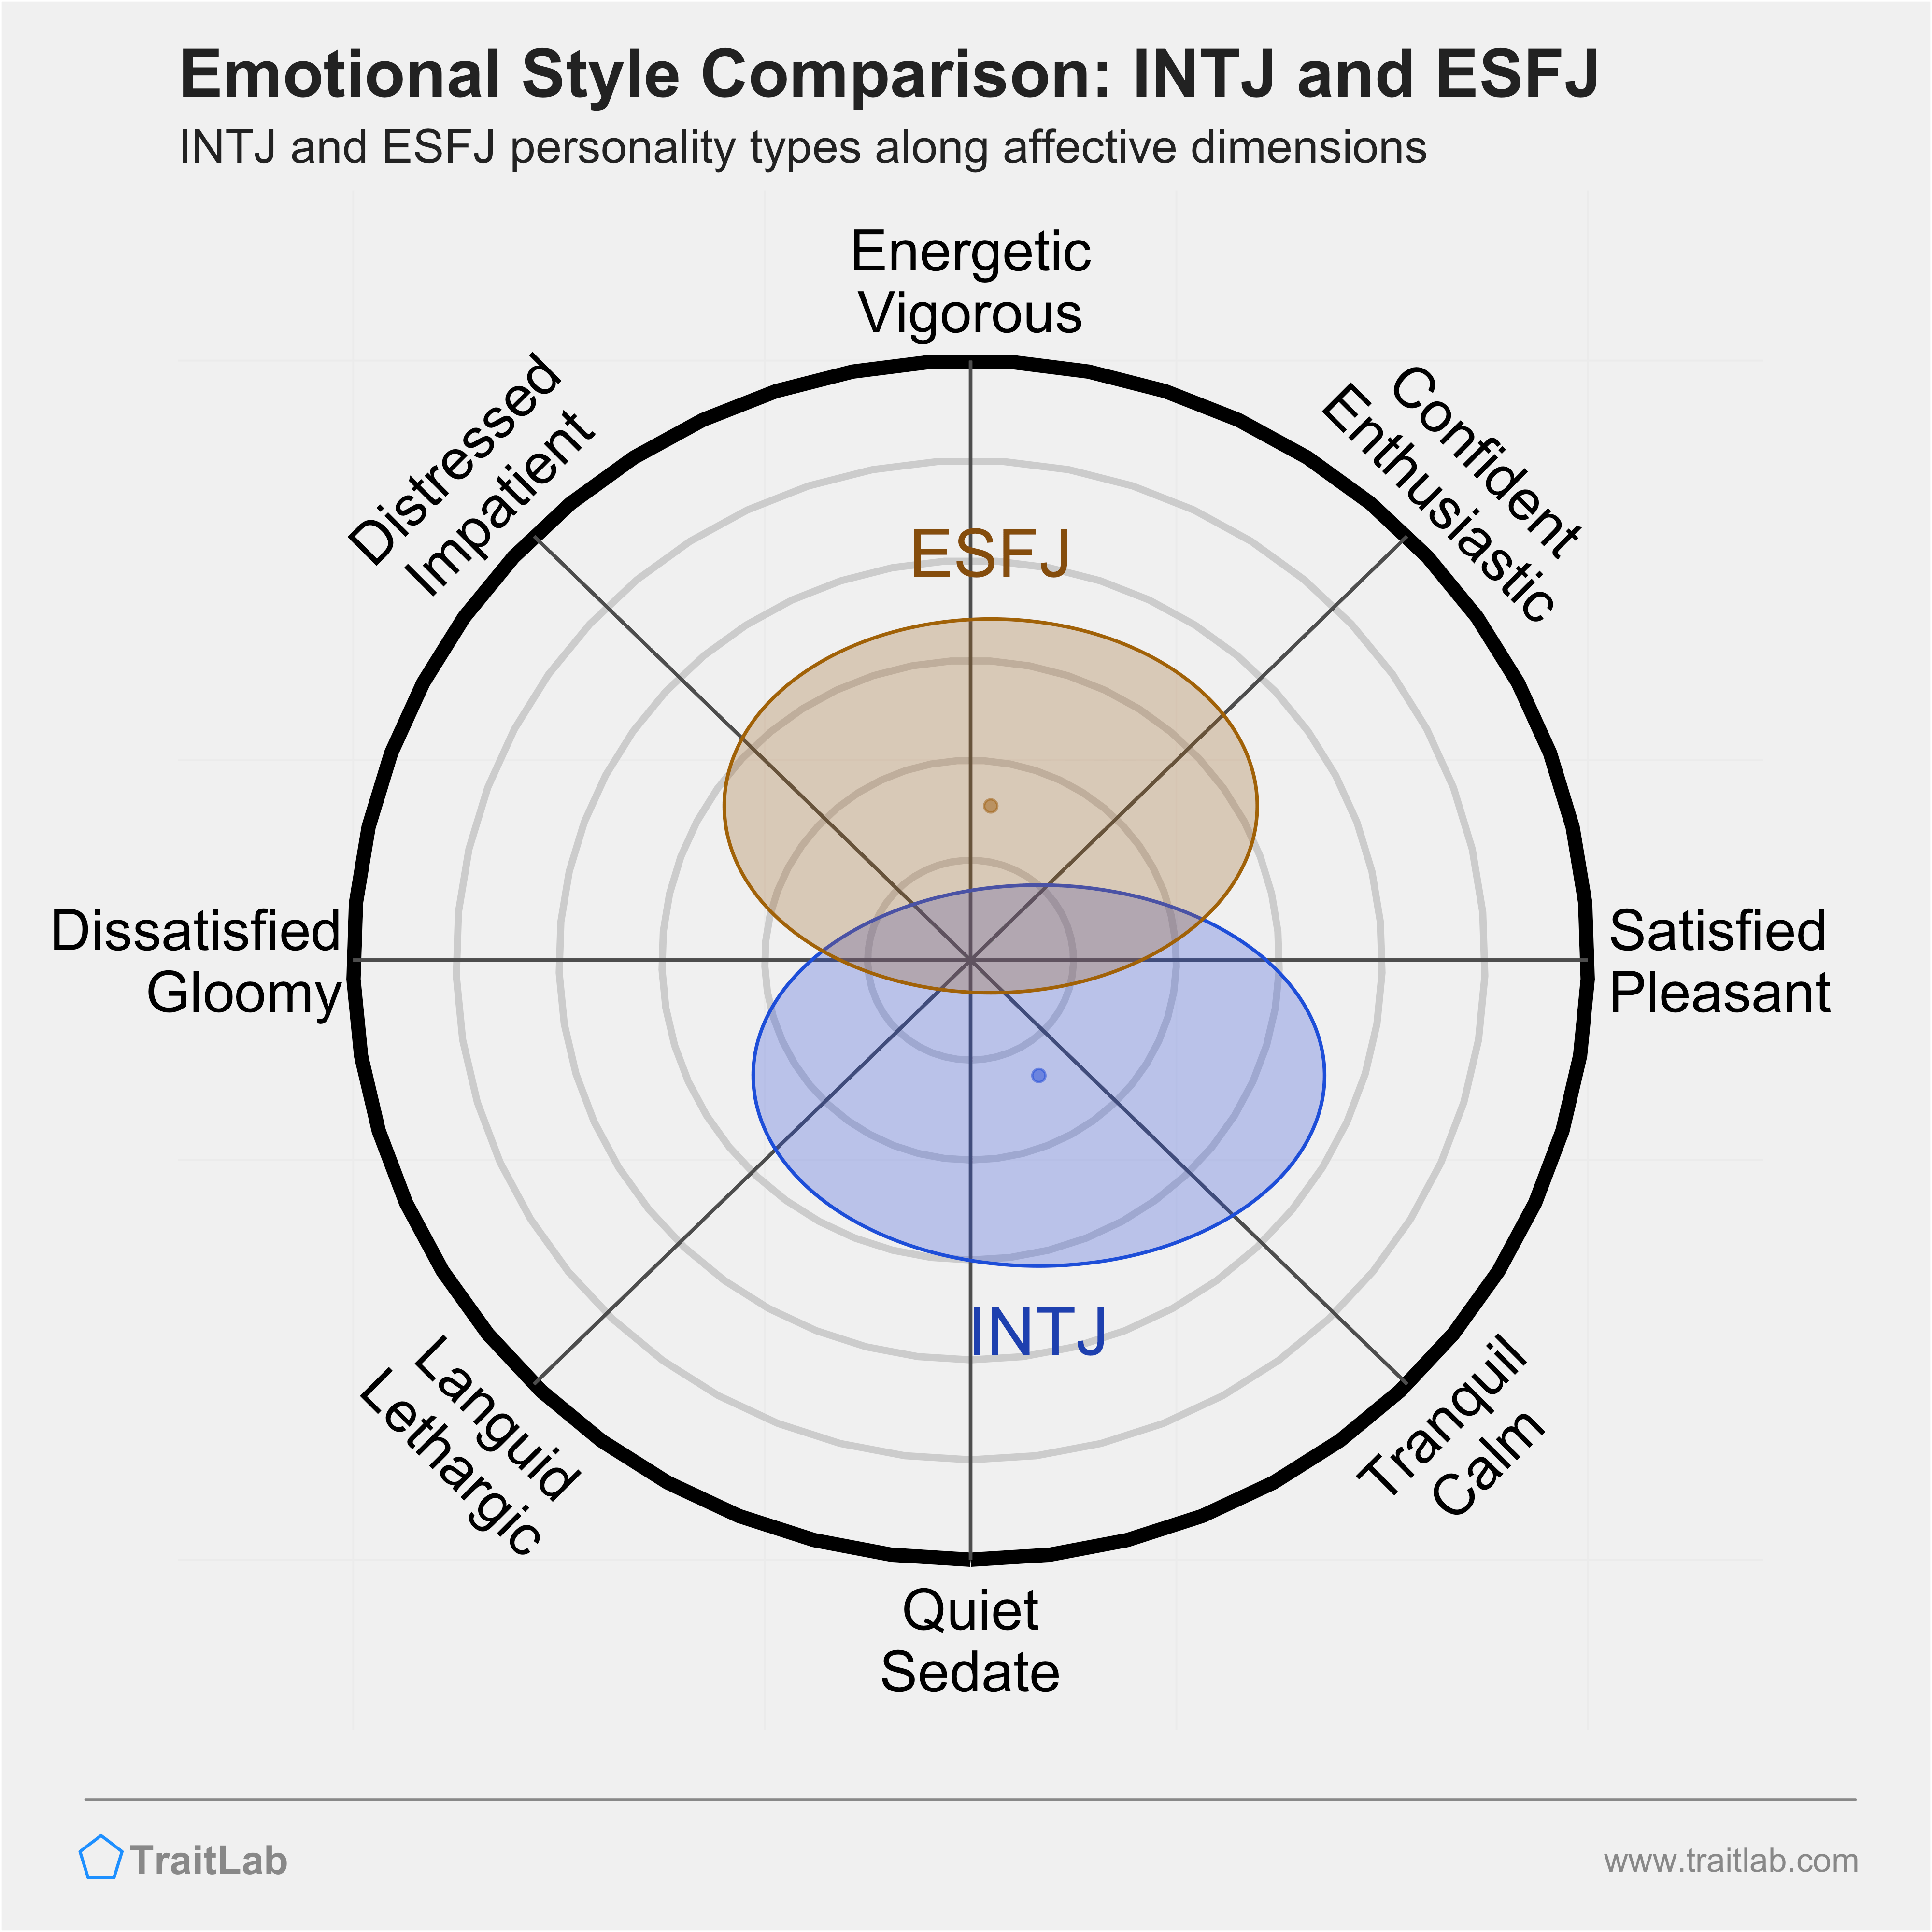 INTJ and ESFJ comparison across emotional (affective) dimensions